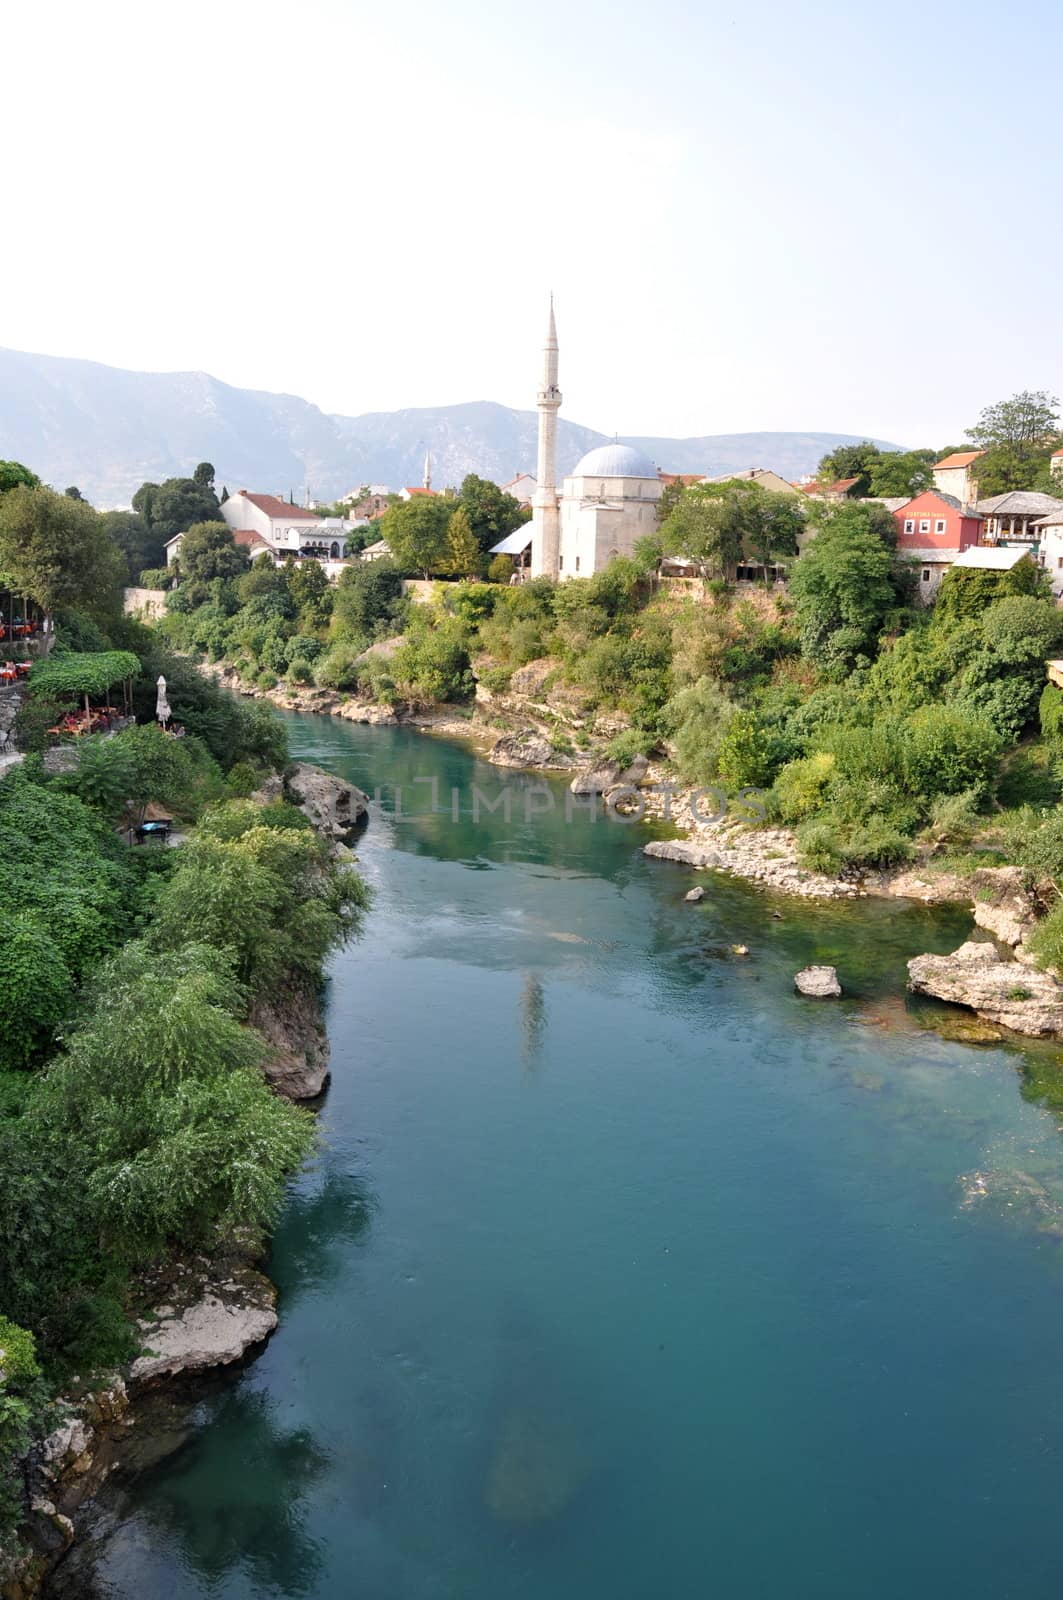 View of Mostar in Bosnia Hercegovina